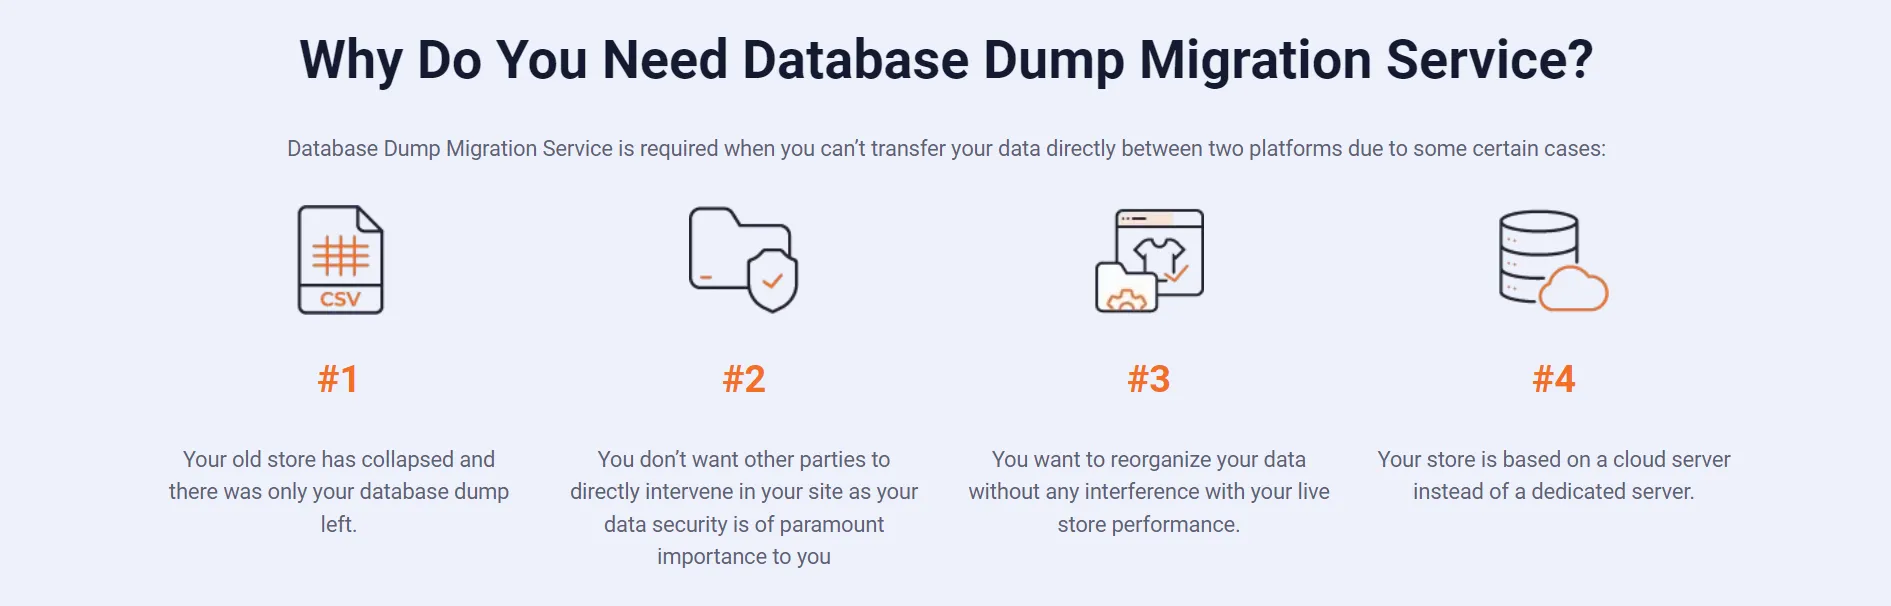 Why do you need database dump